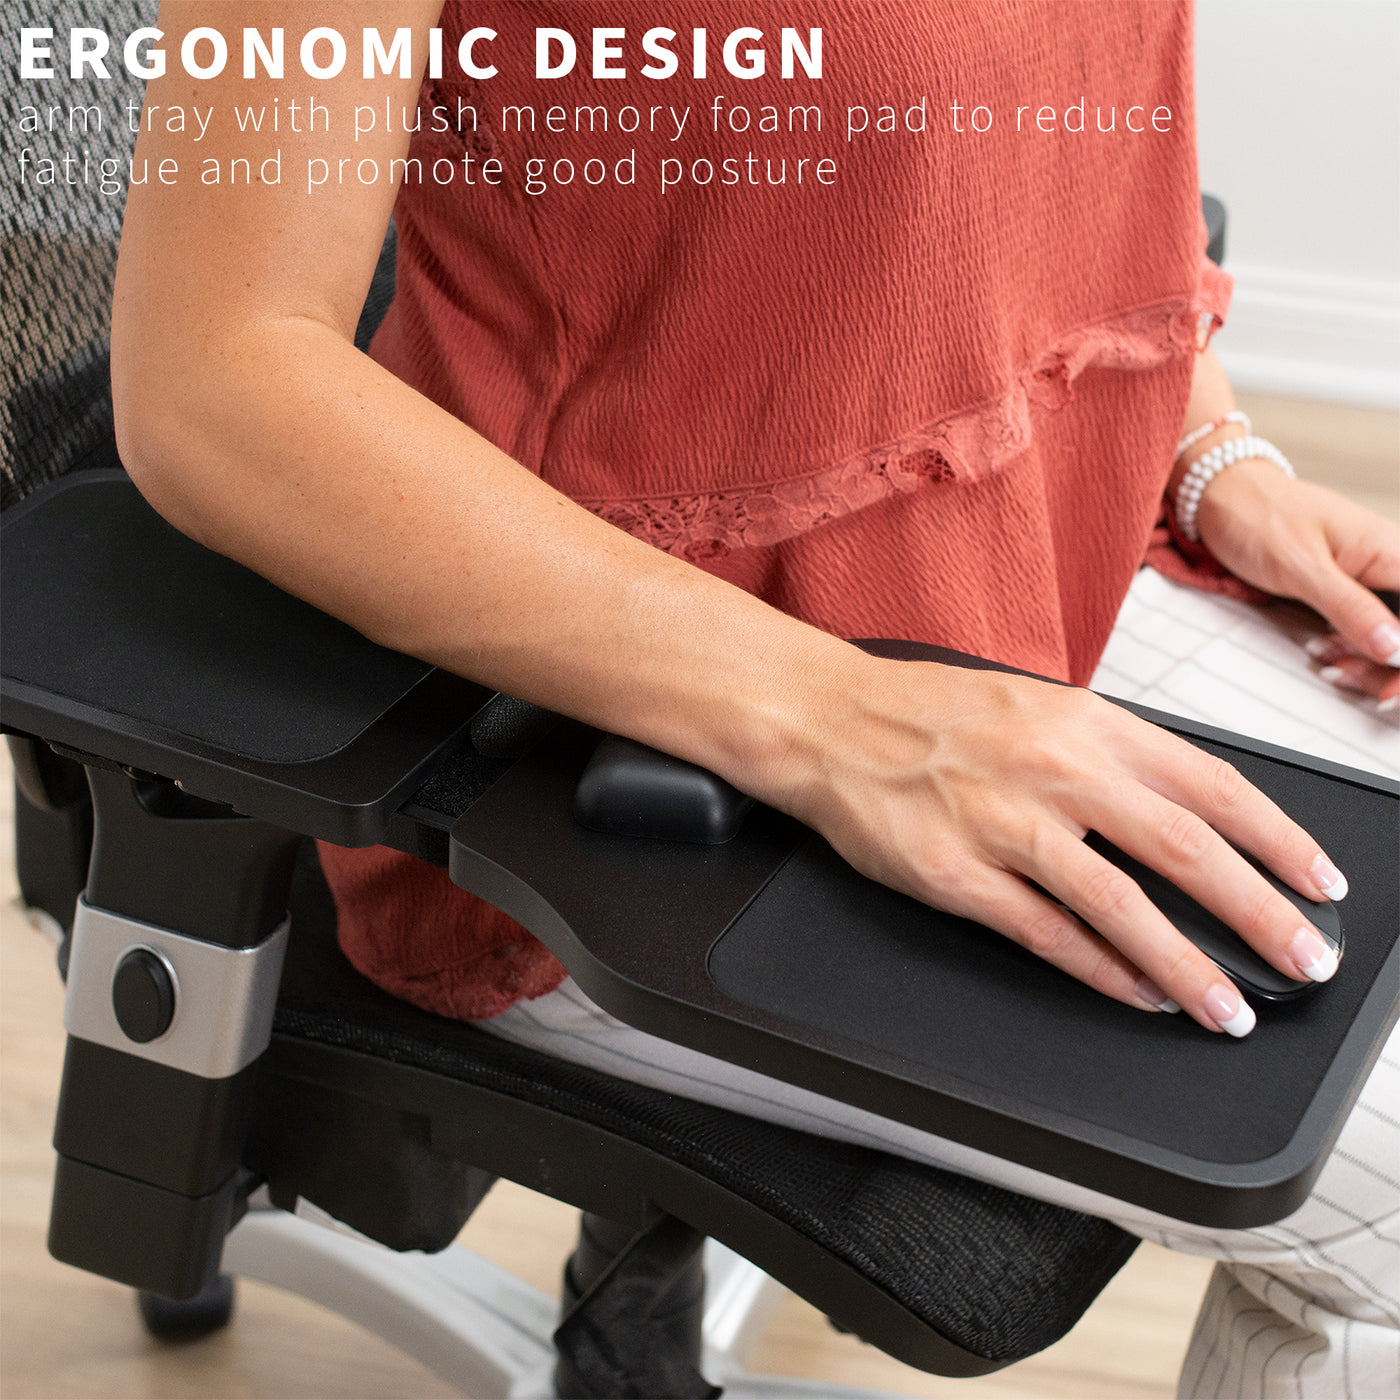 Ergonomic design with plush memory foam mousepad.